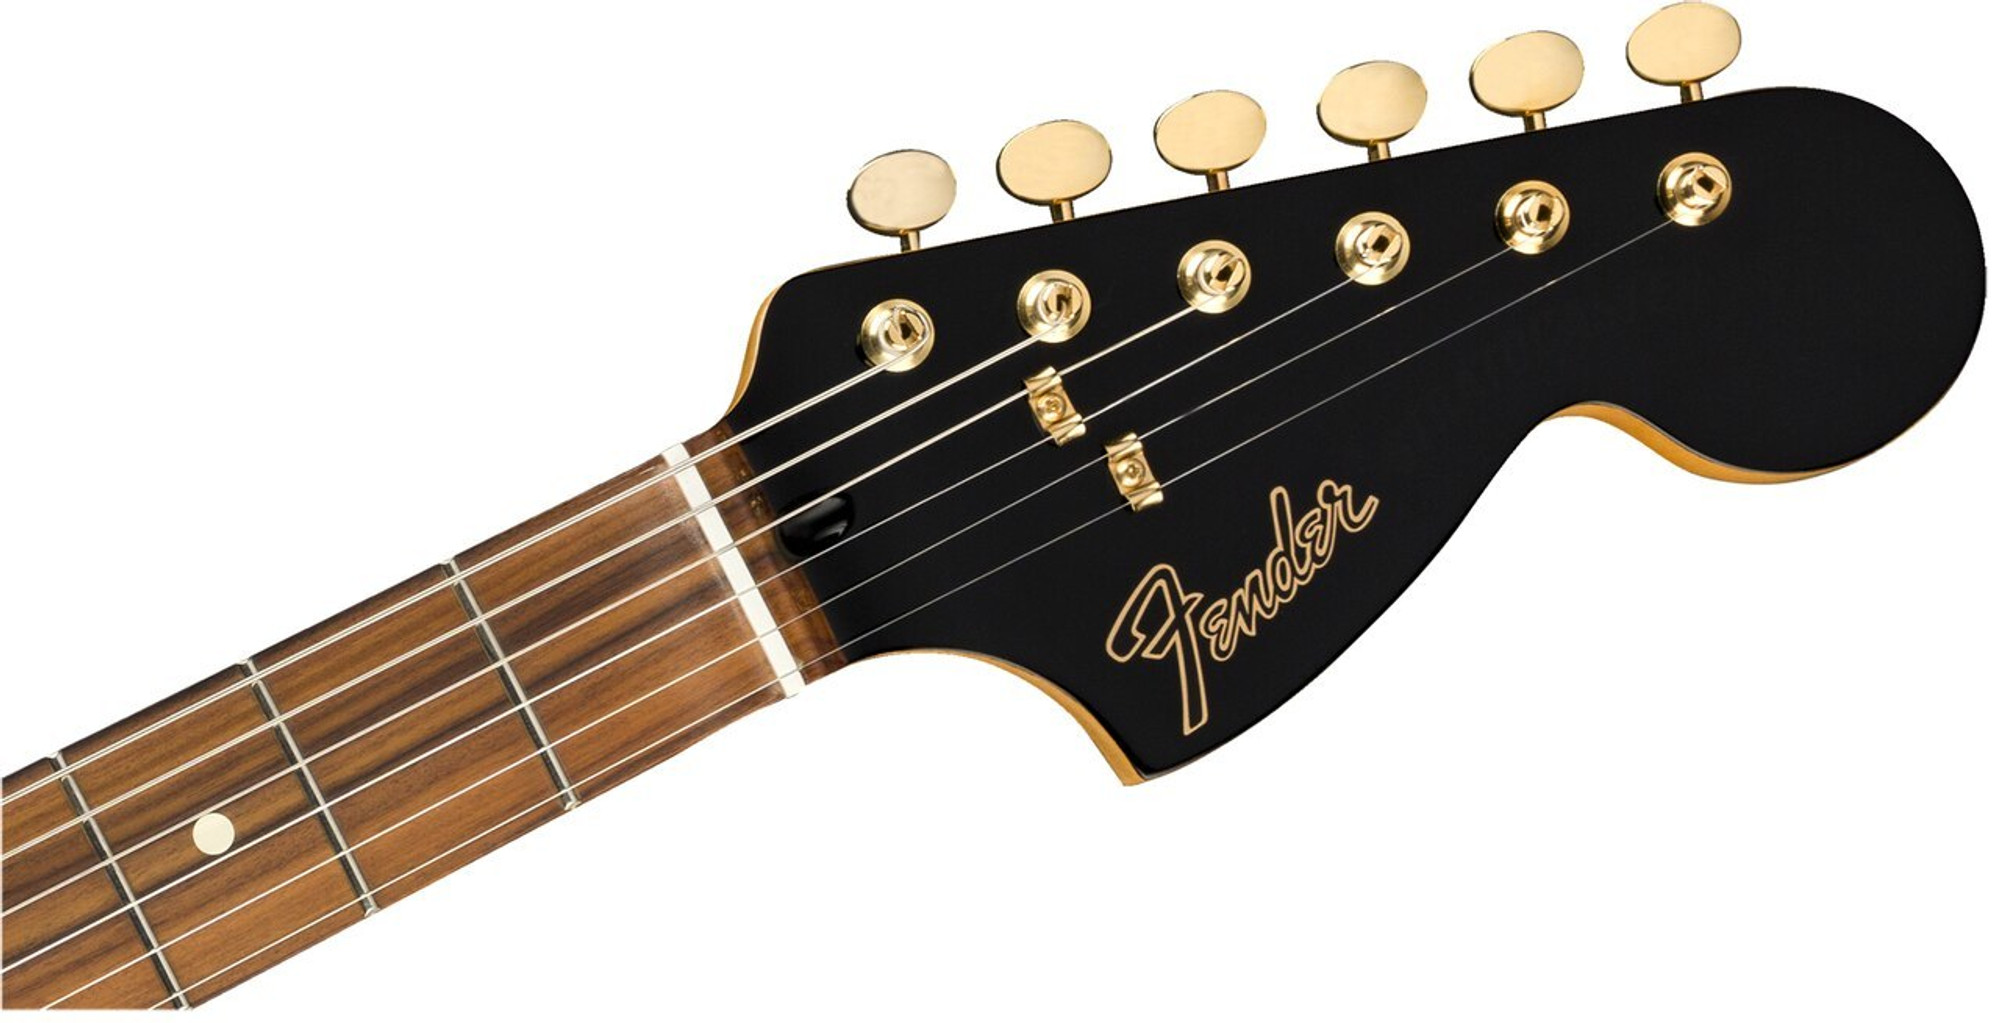 Fender Limited Mahogany Blacktop Stratocaster - Black w/ Gold Hardware